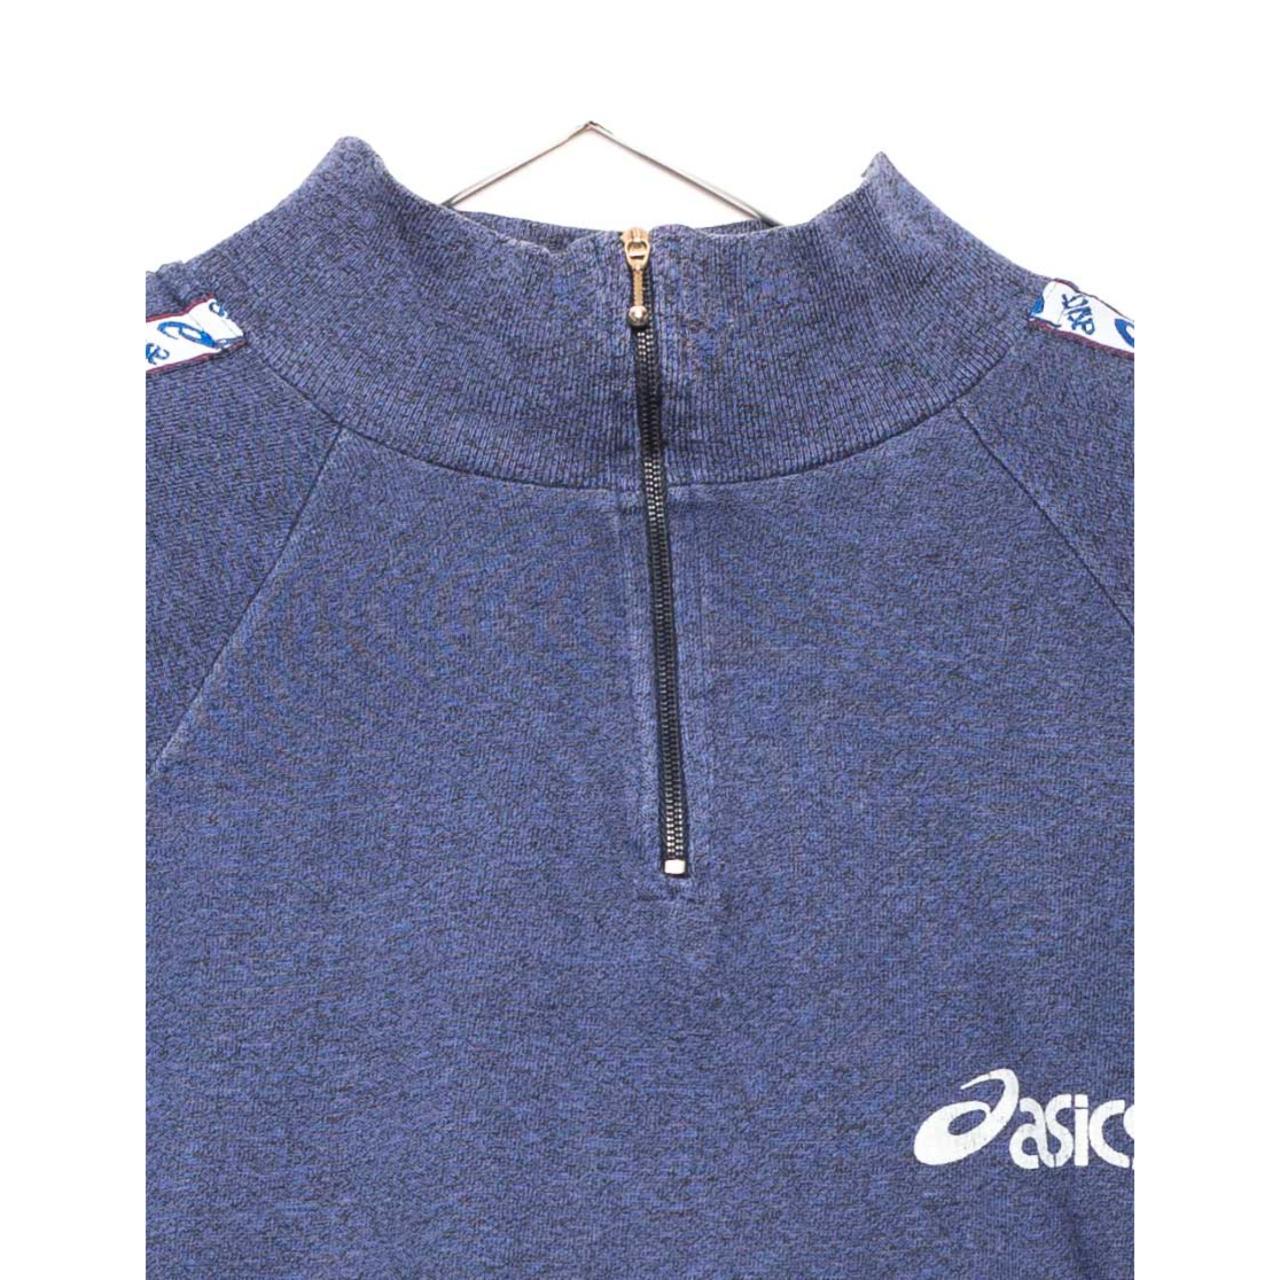 ASICS Men's Blue Sweatshirt | Depop